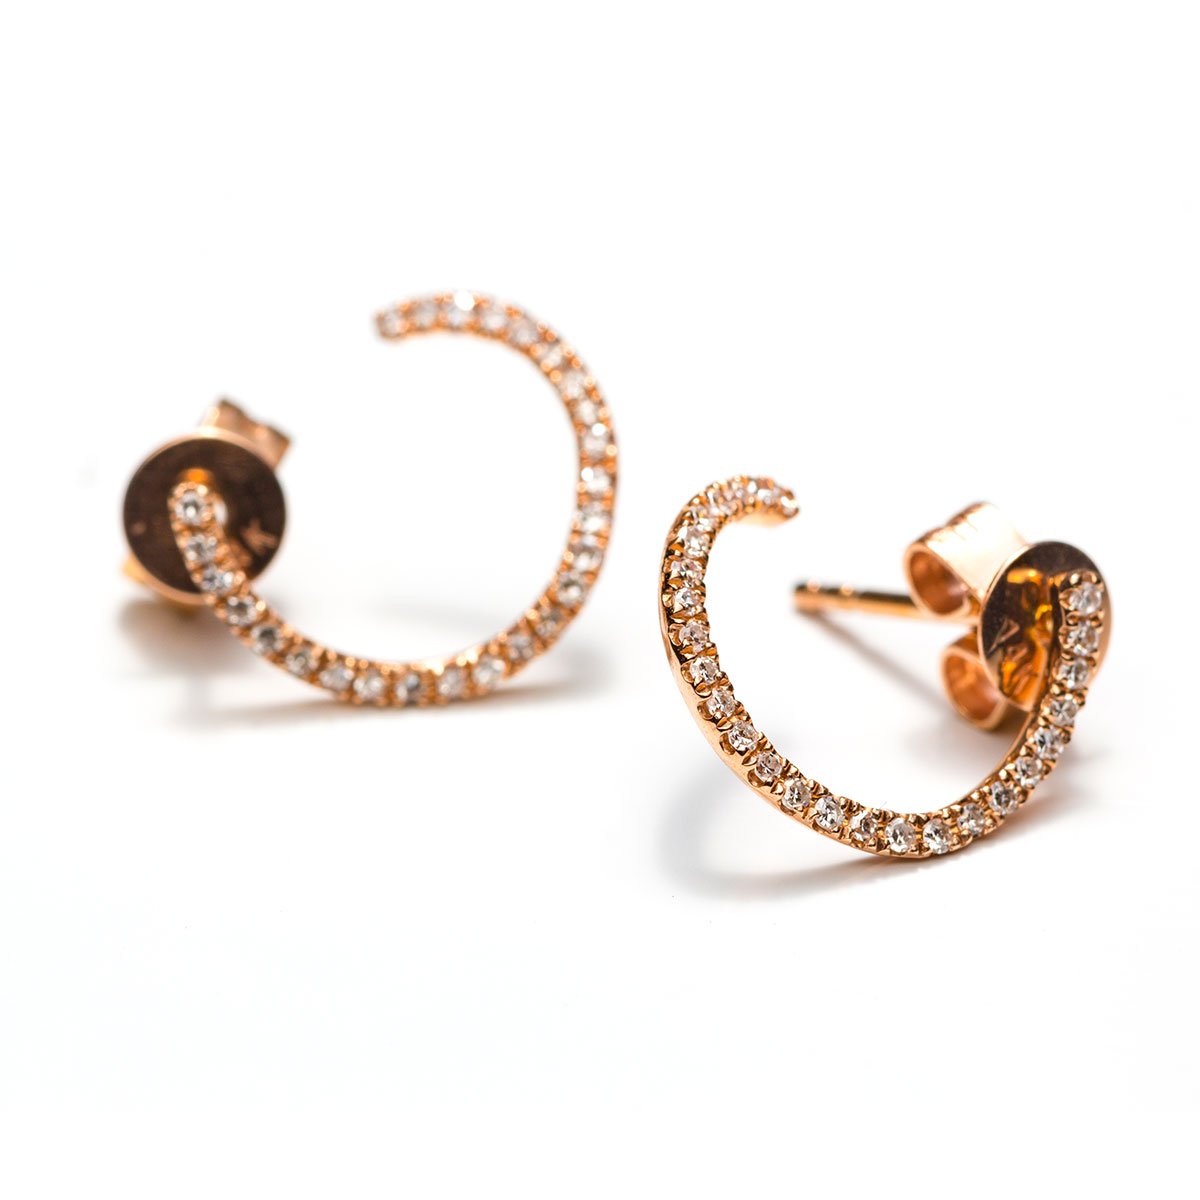 Diamond Spiral Studs-Earrings-Zofia Day Co.